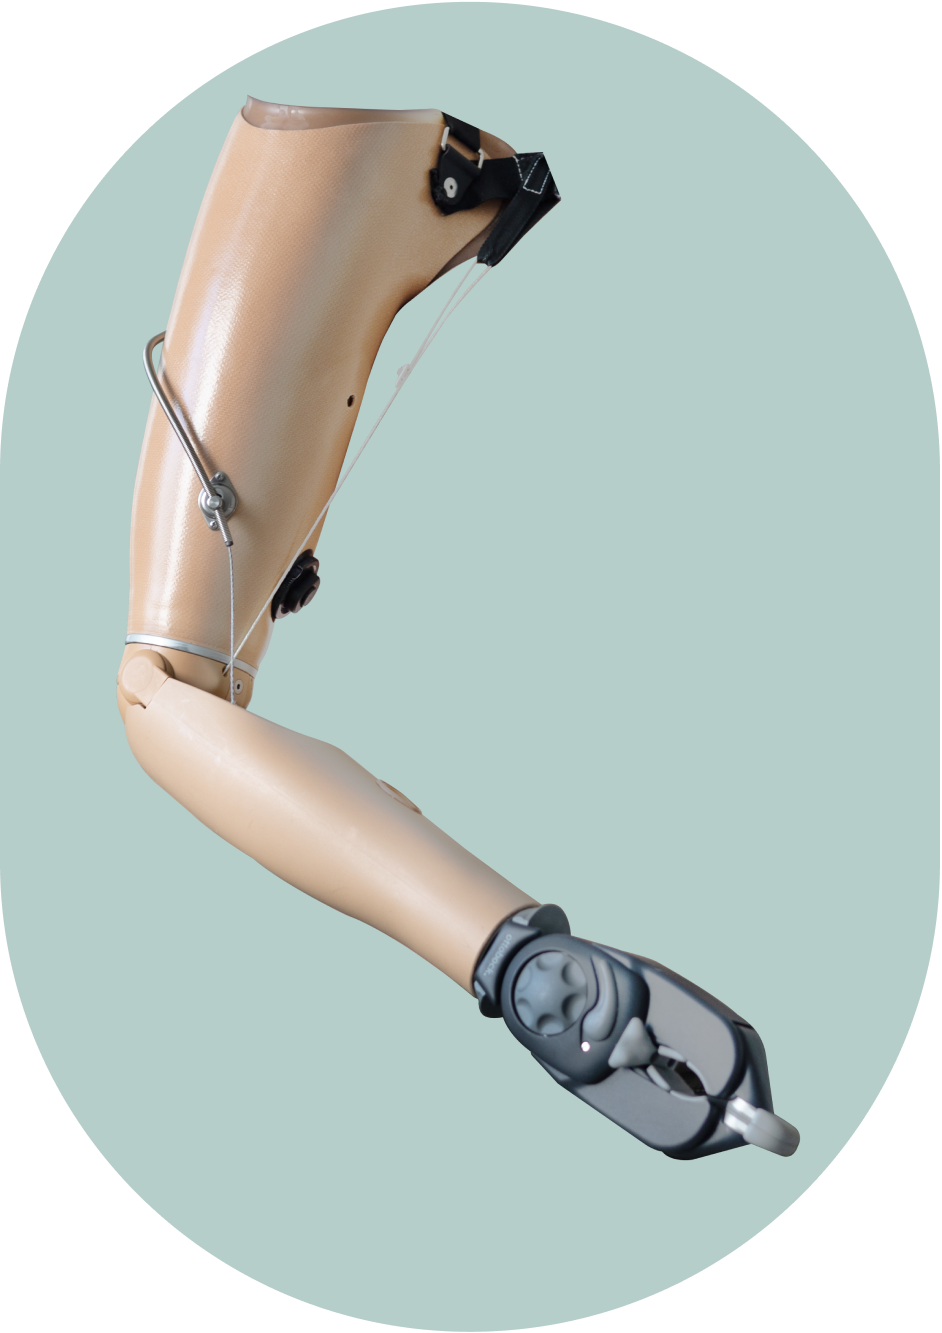 Greifer DMC VariPlus active electric arm prosthesis